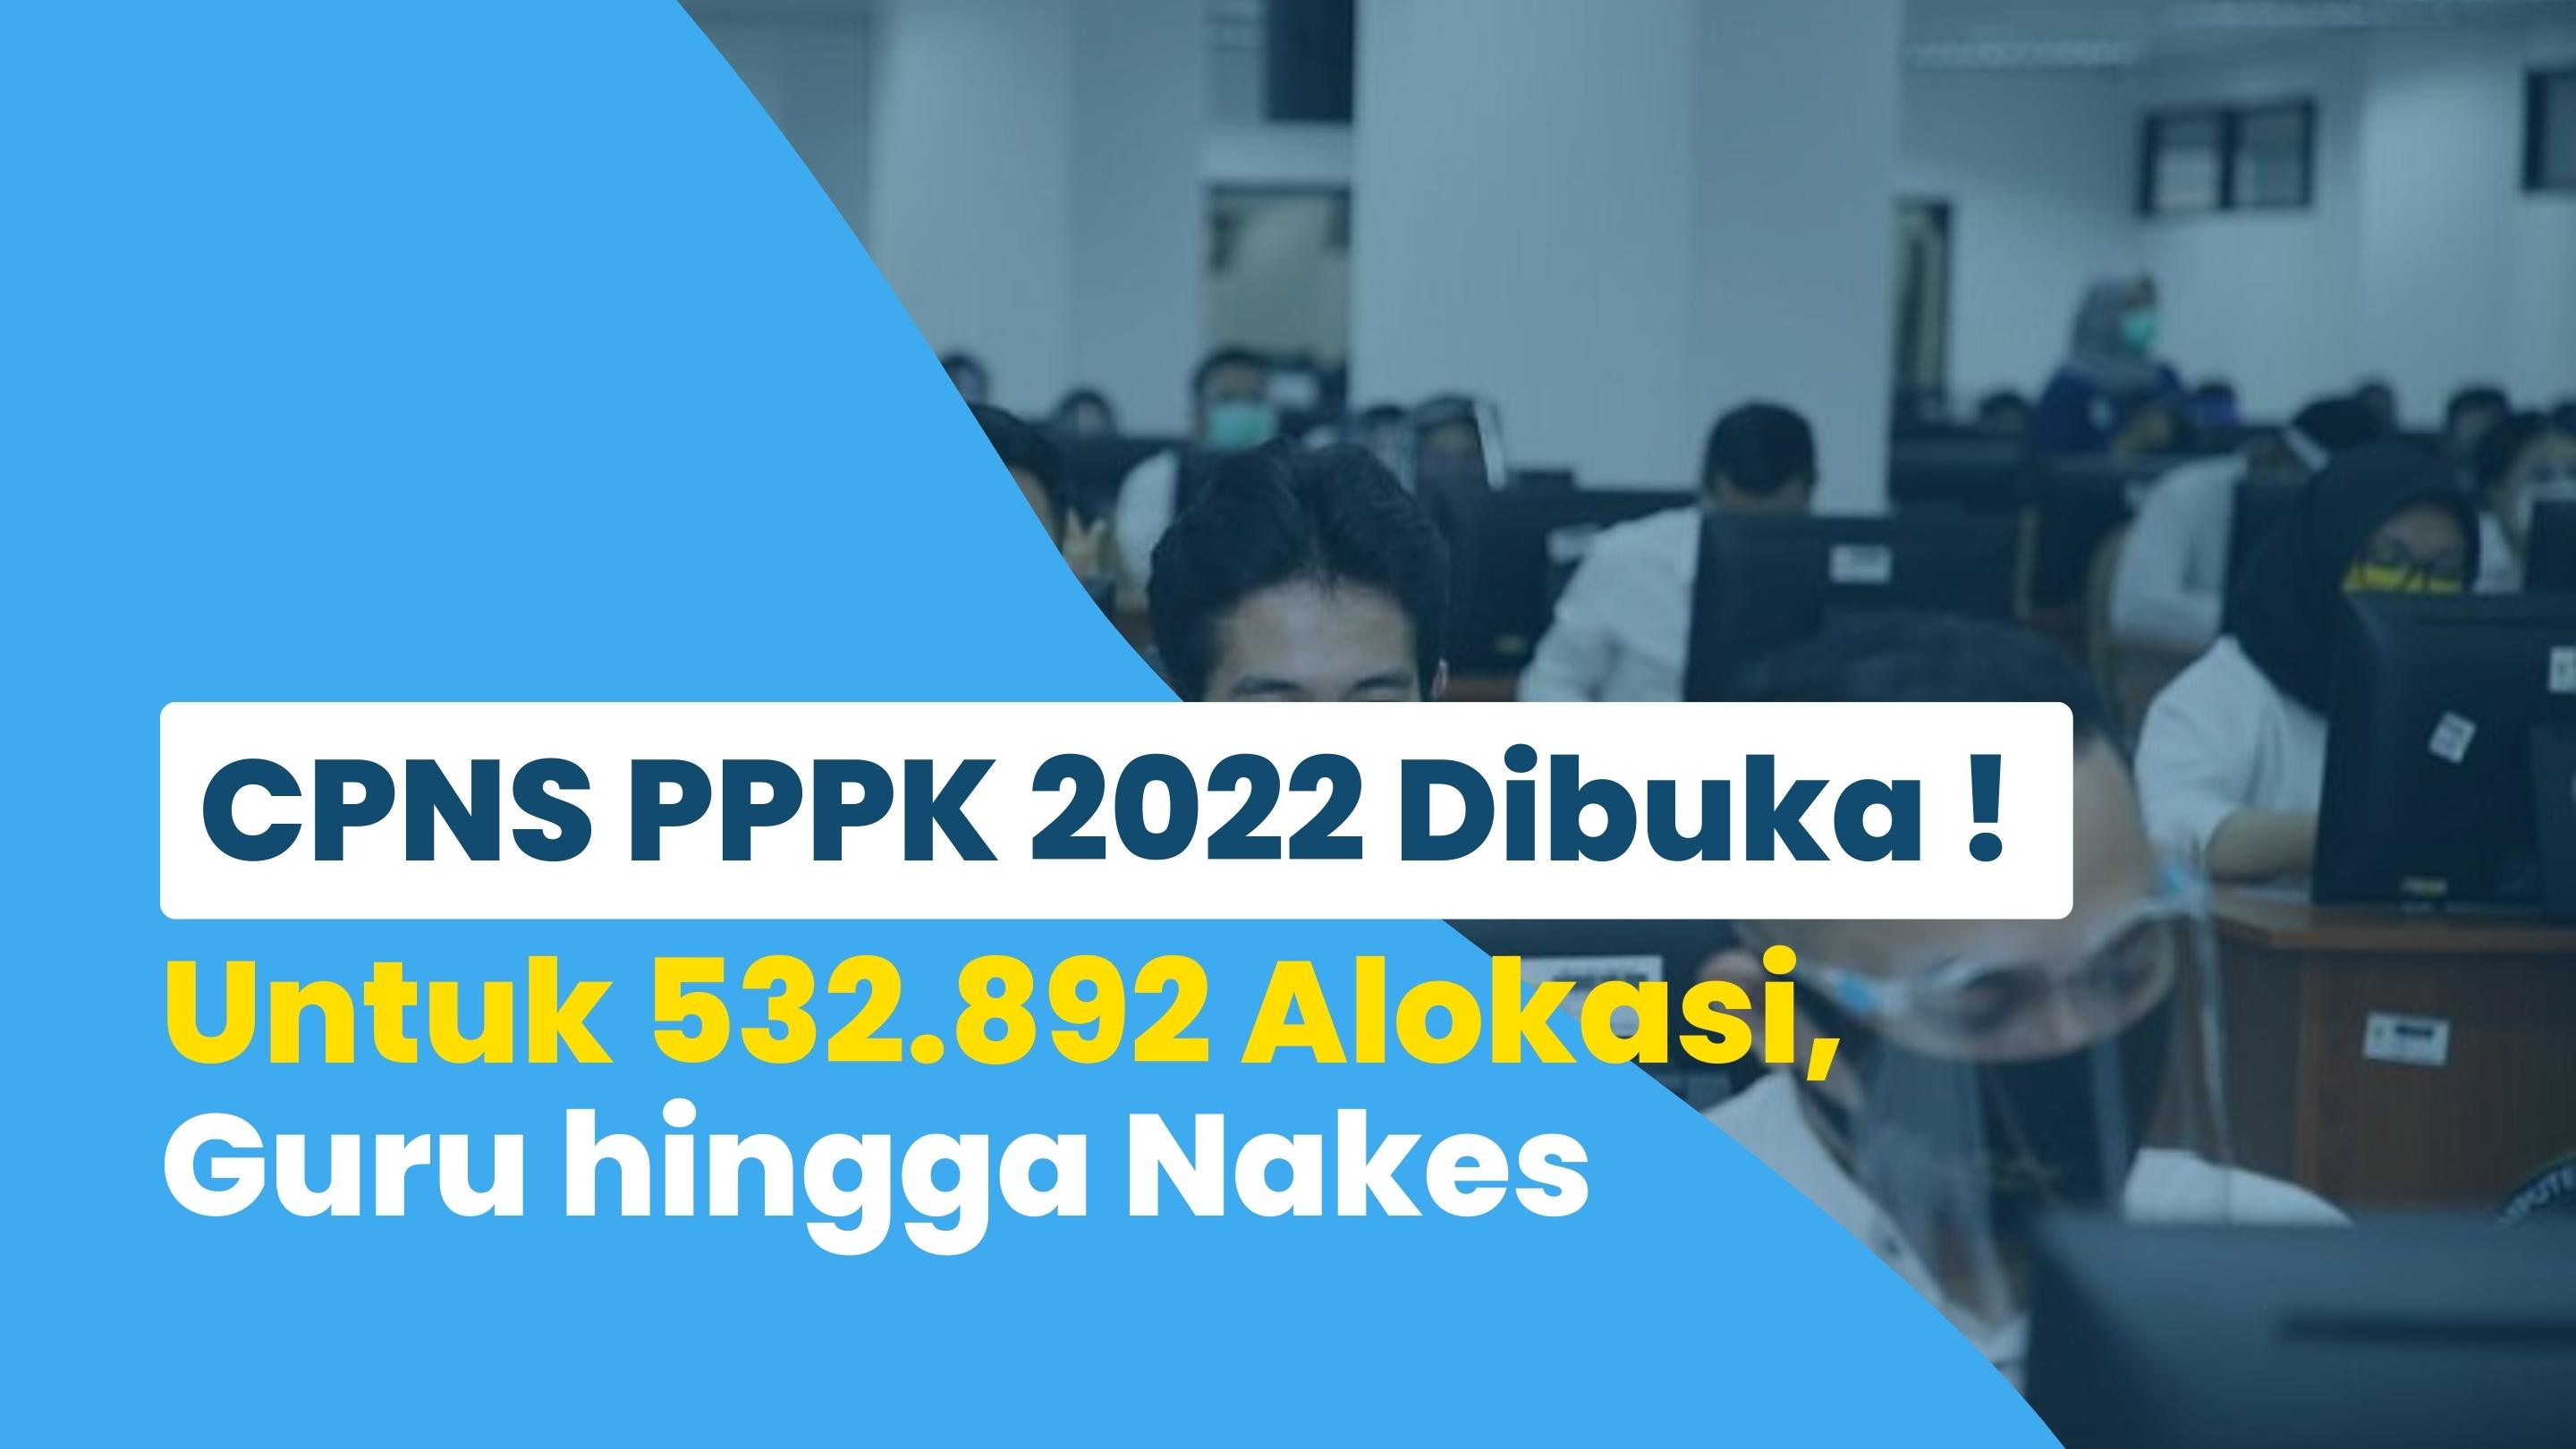 CPNS PPPK 2022 Dibuka ! Untuk 532.892 Alokasi, Guru hingga Nakes